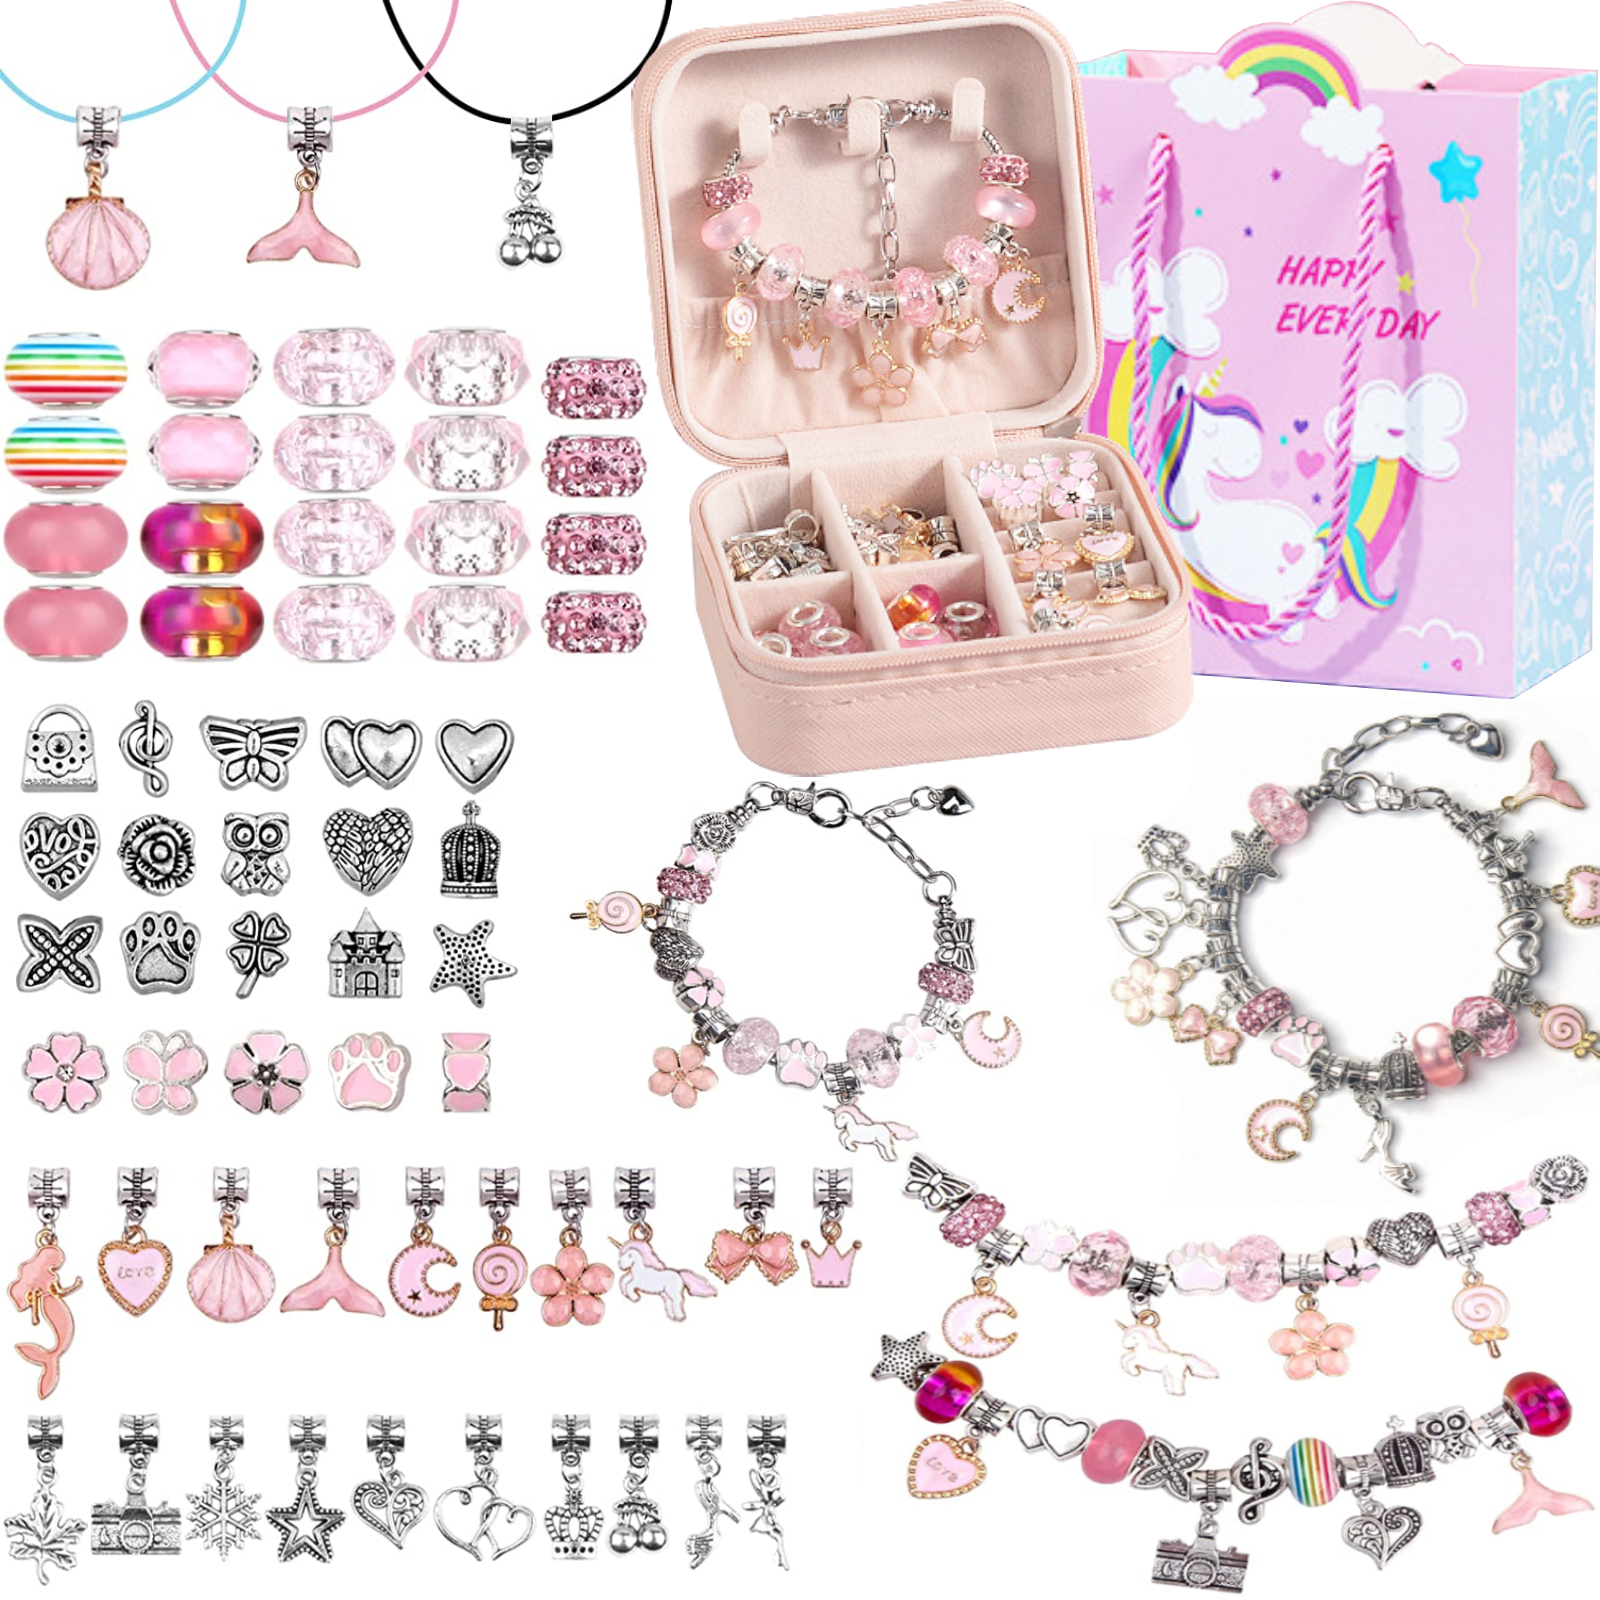  Charm Bracelets Making Kit for Girls,73Pcs Jewelry